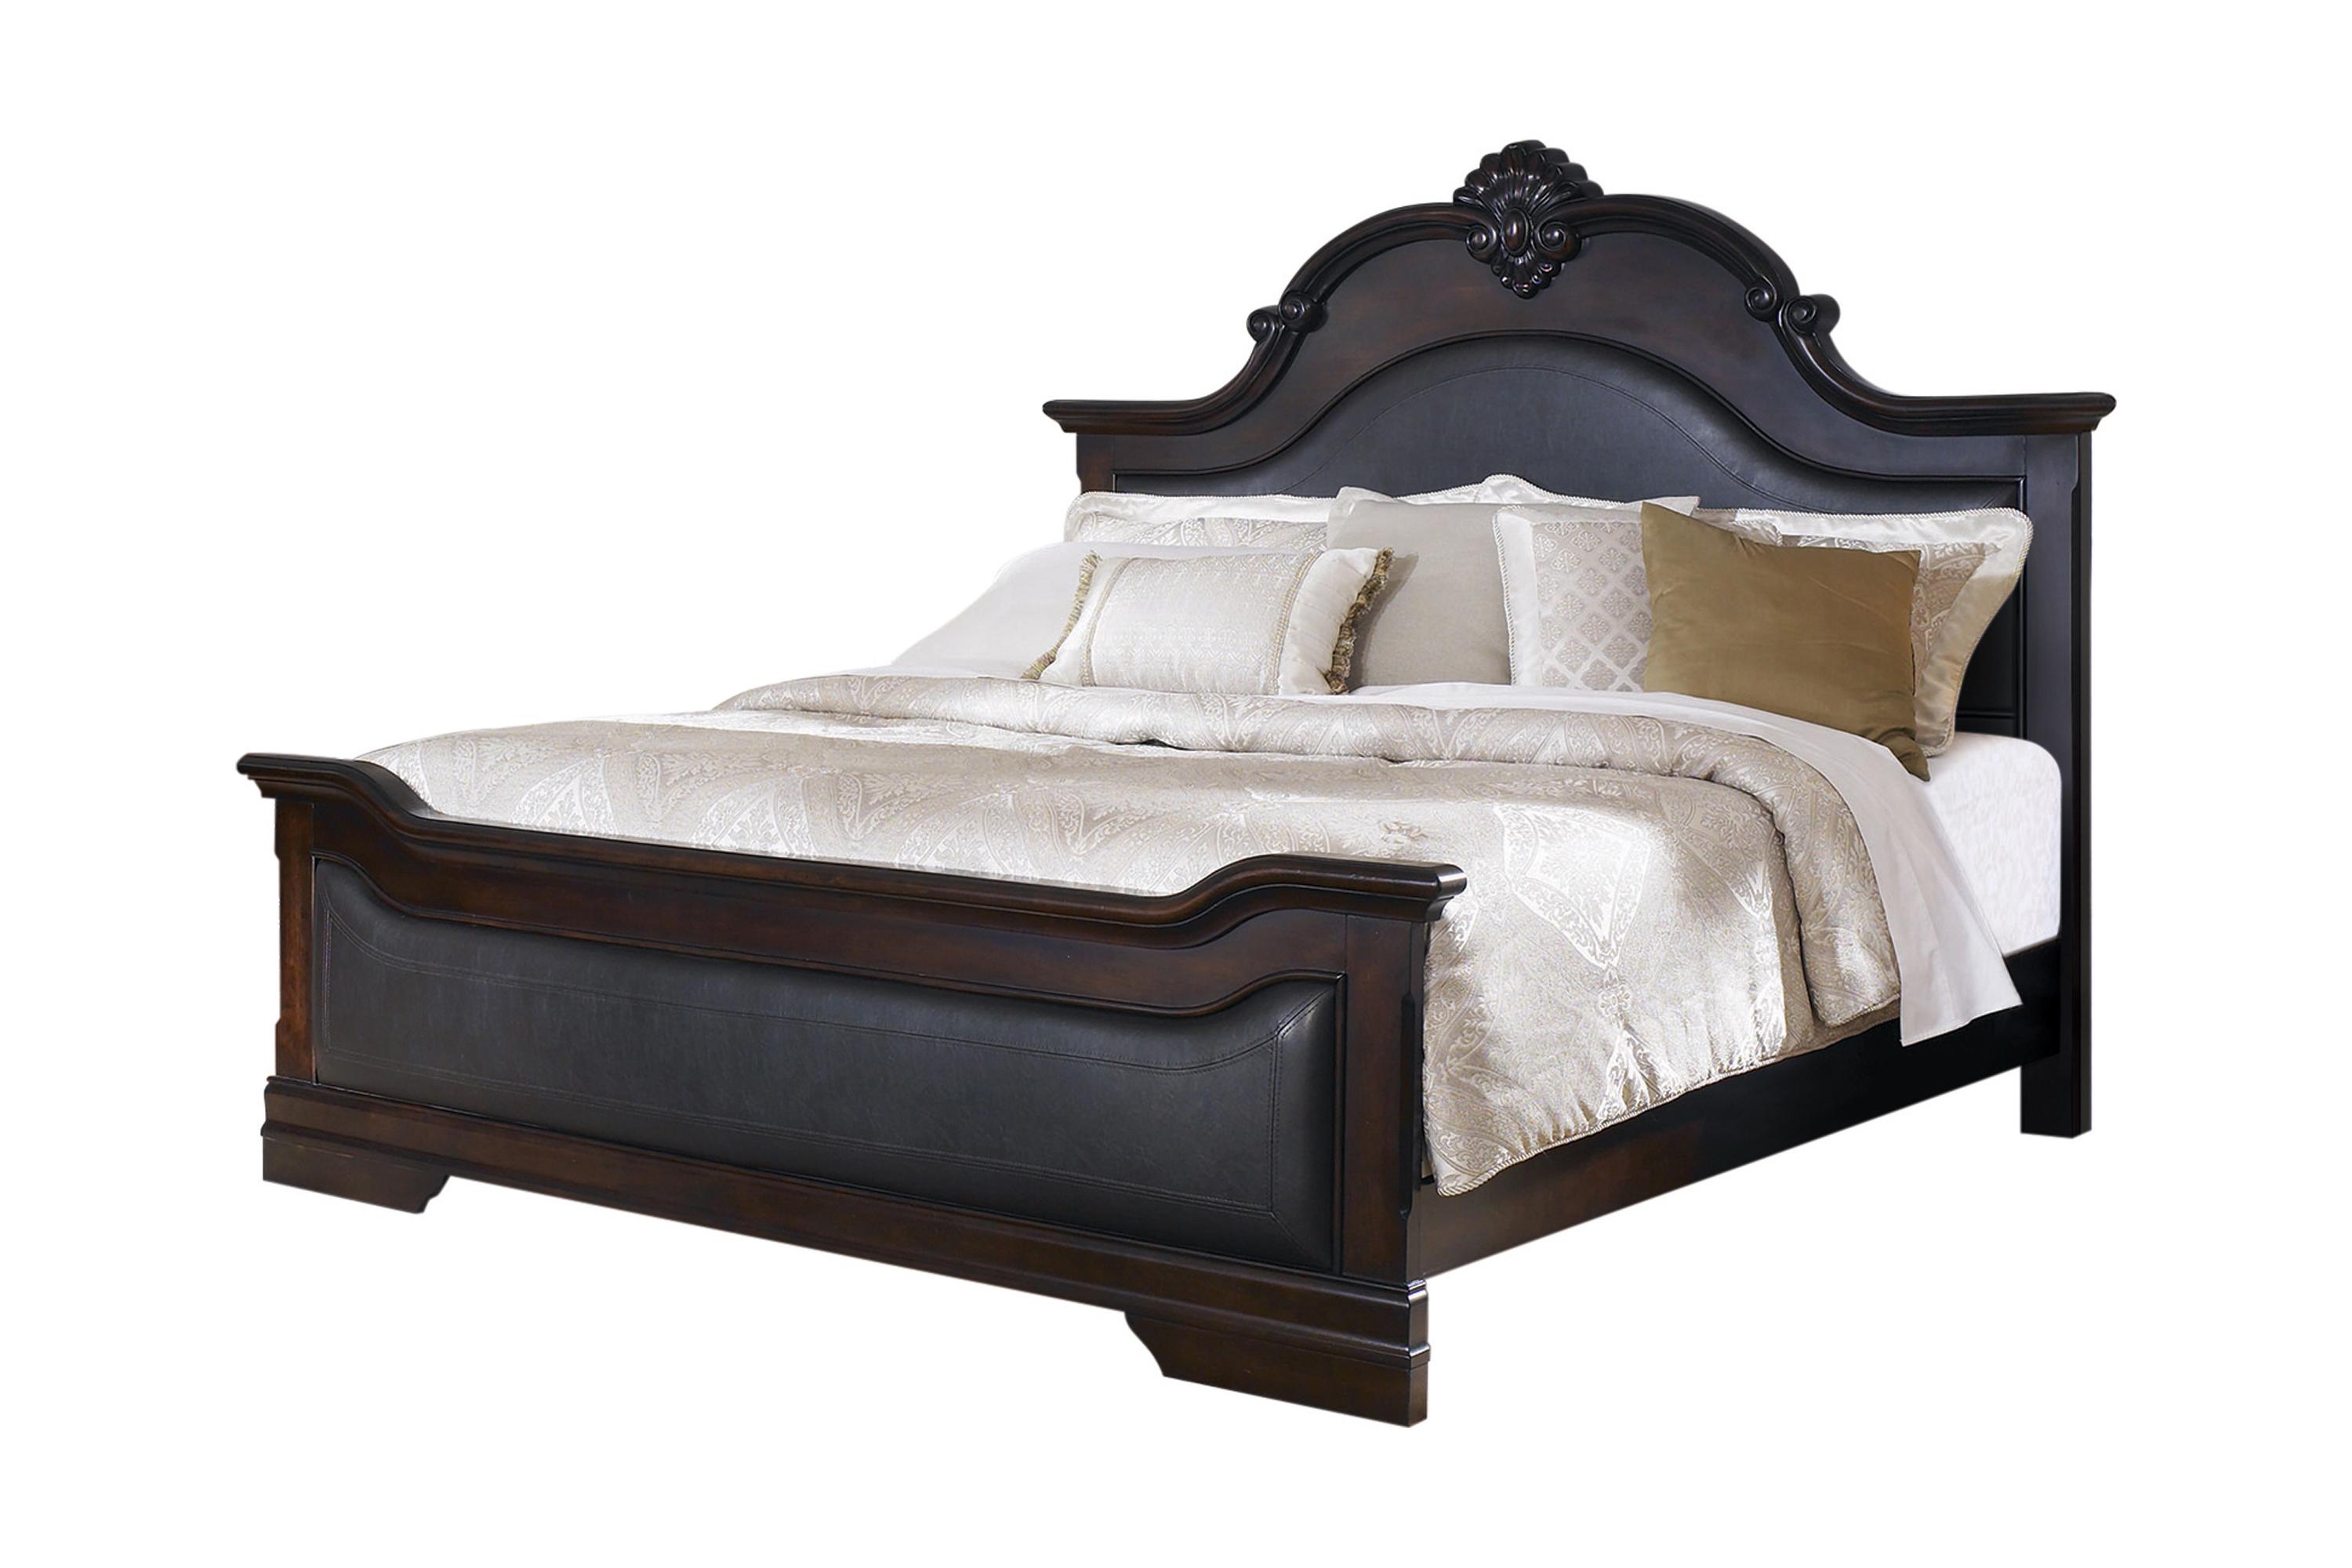 Traditional Bed 203191KE Cambridge 203191KE in Cappuccino Leatherette